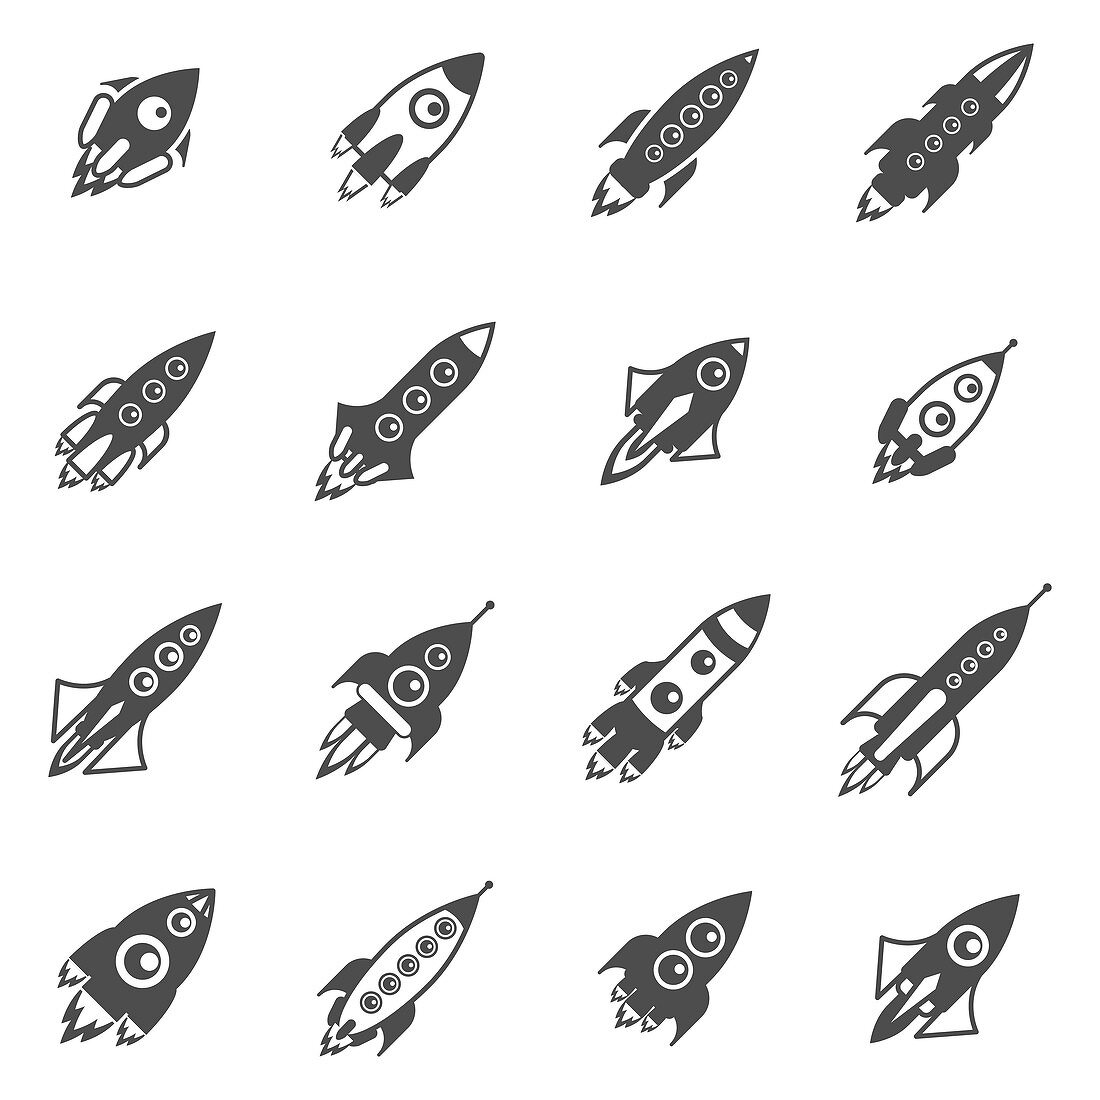 Rocket icons, illustration